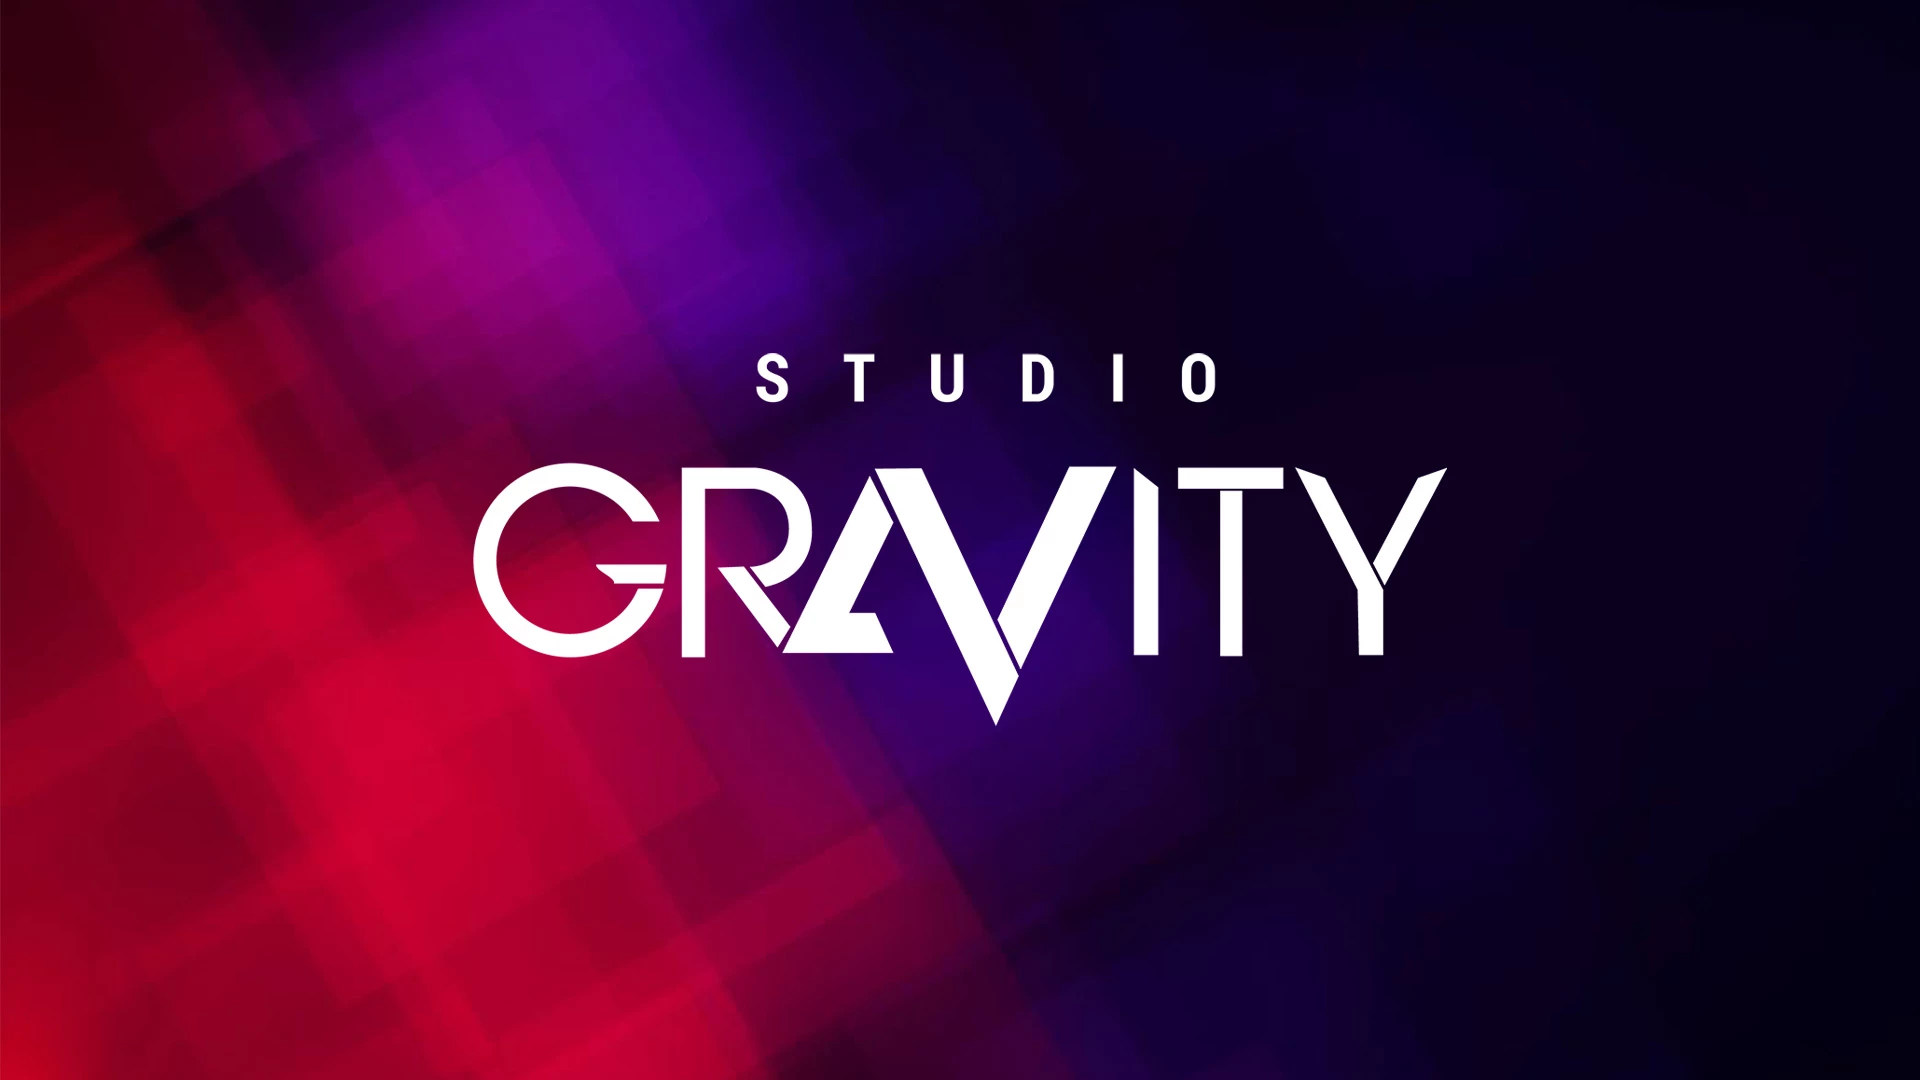 Studio Gravity Logo Design